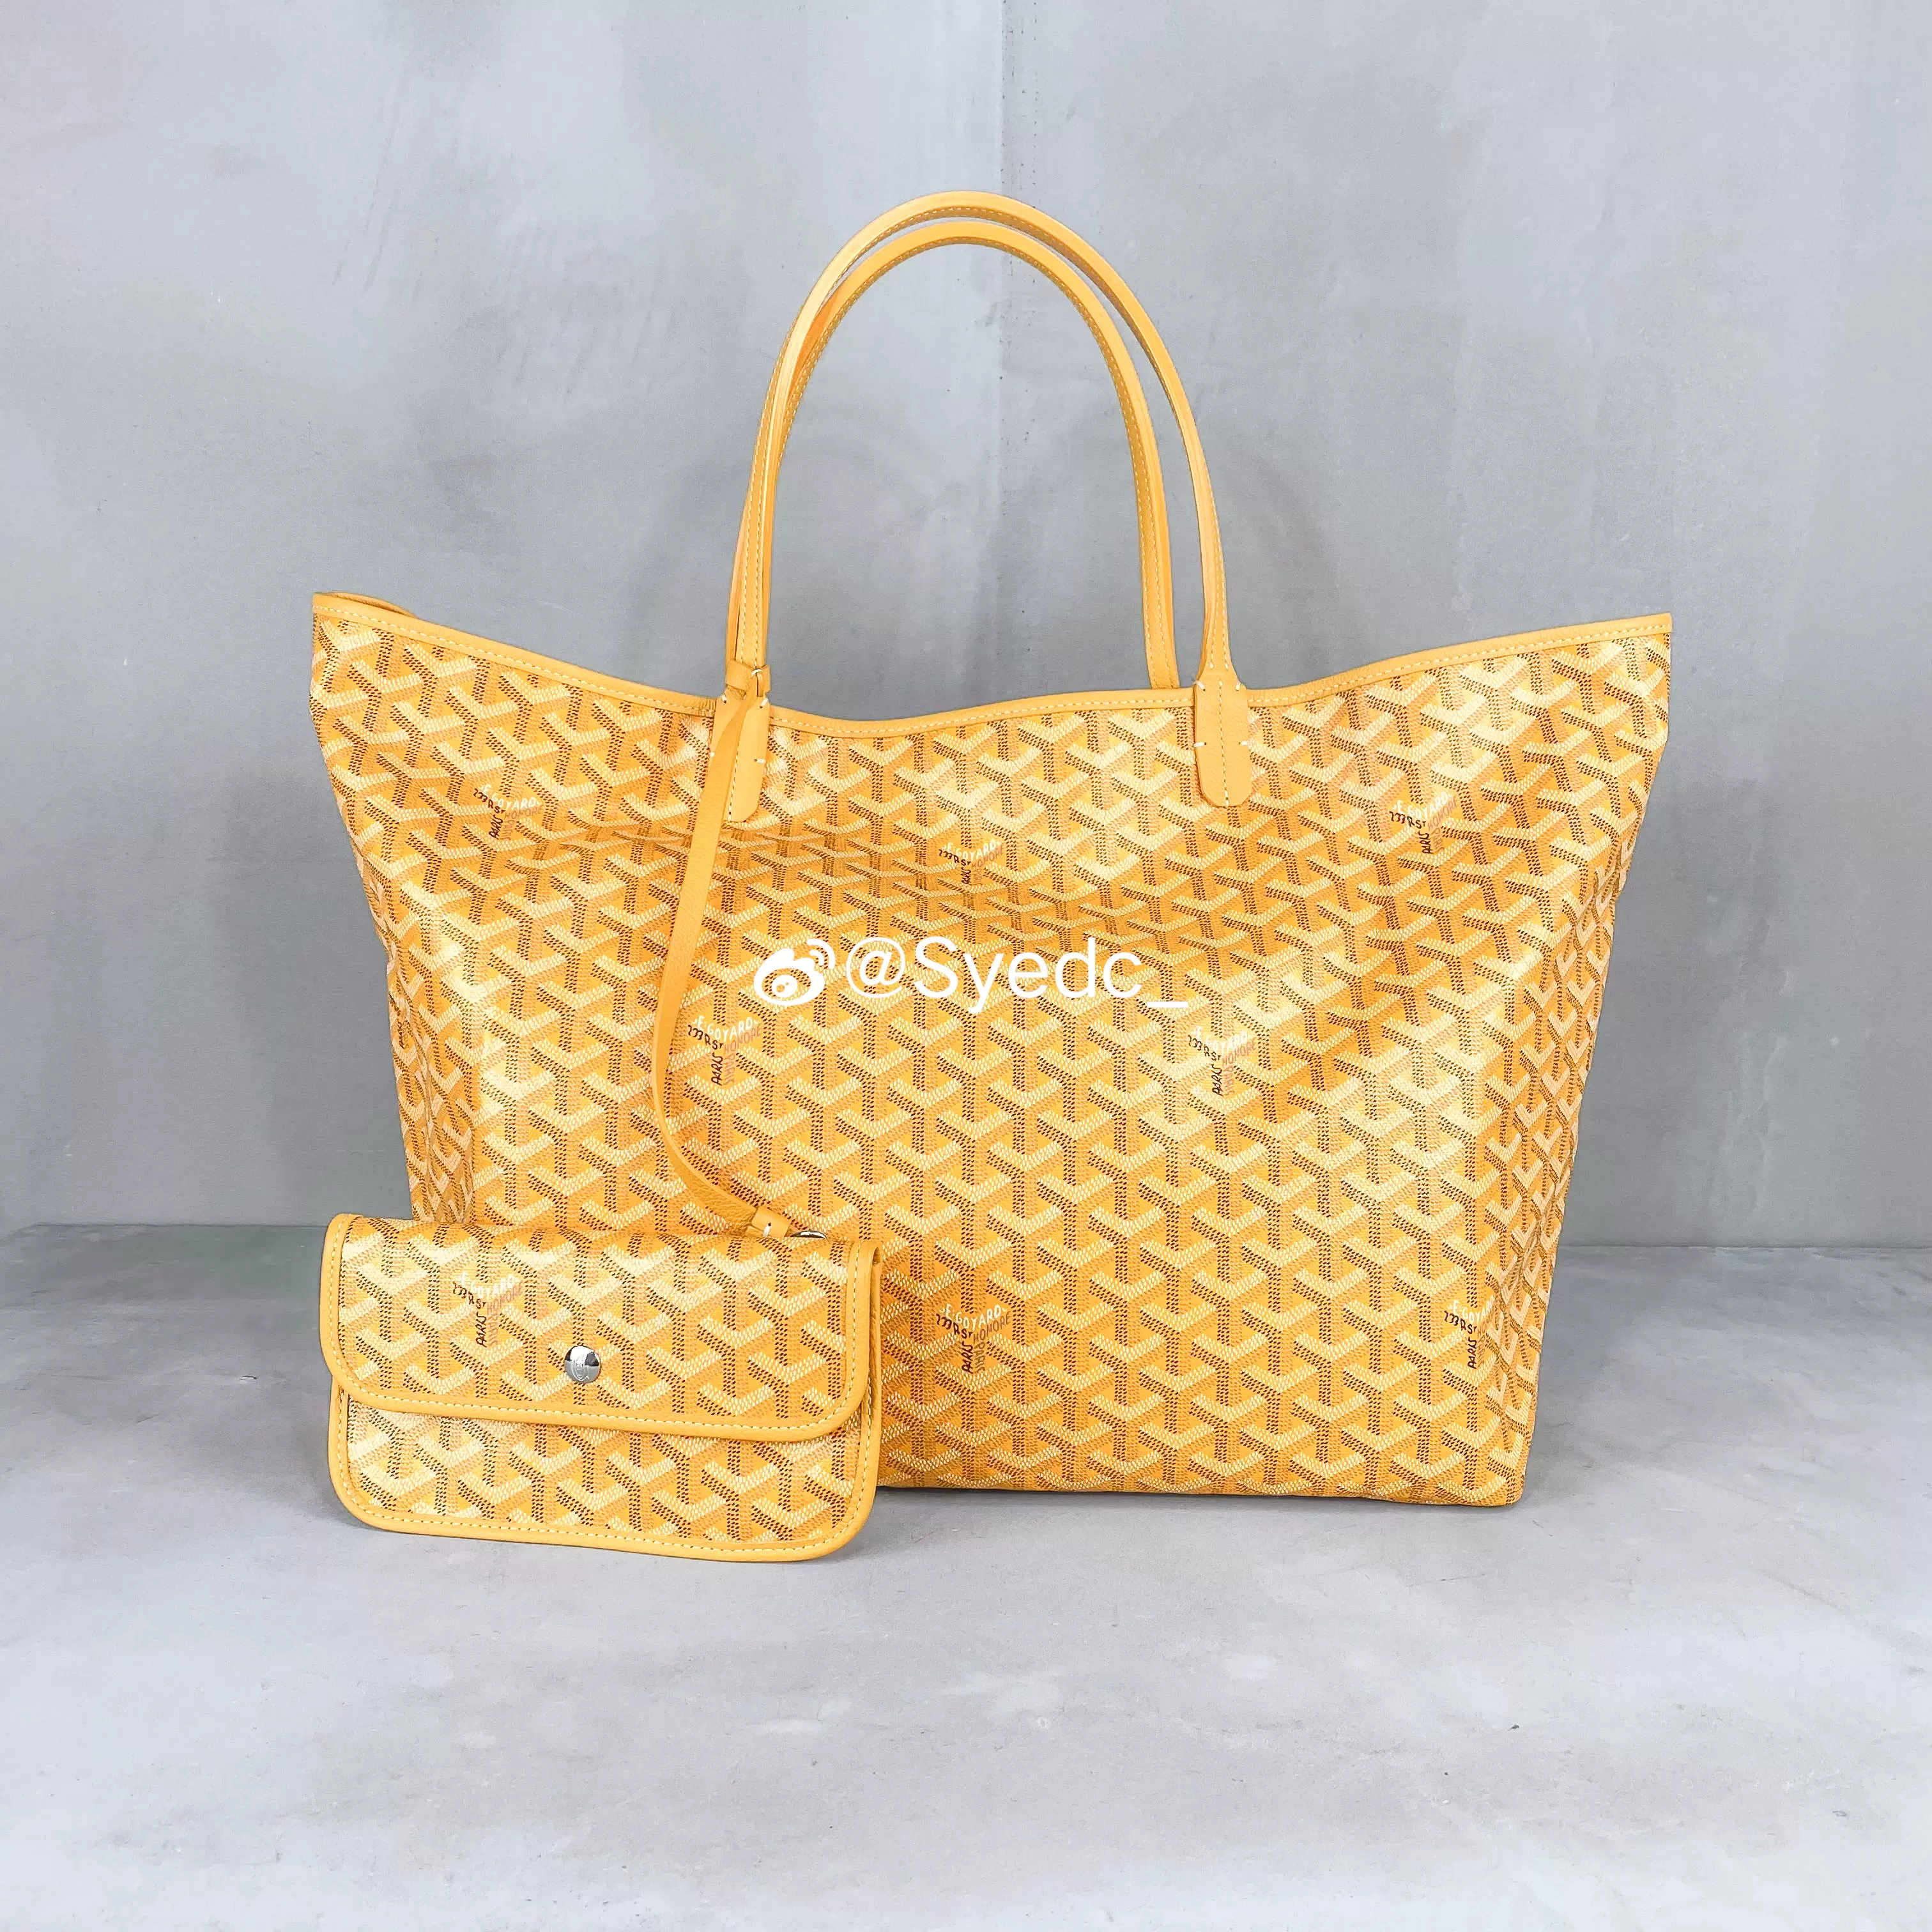 现货】LV Fragment Louis Vuitton Nano藤原浩闪电水桶包斜跨包-Taobao